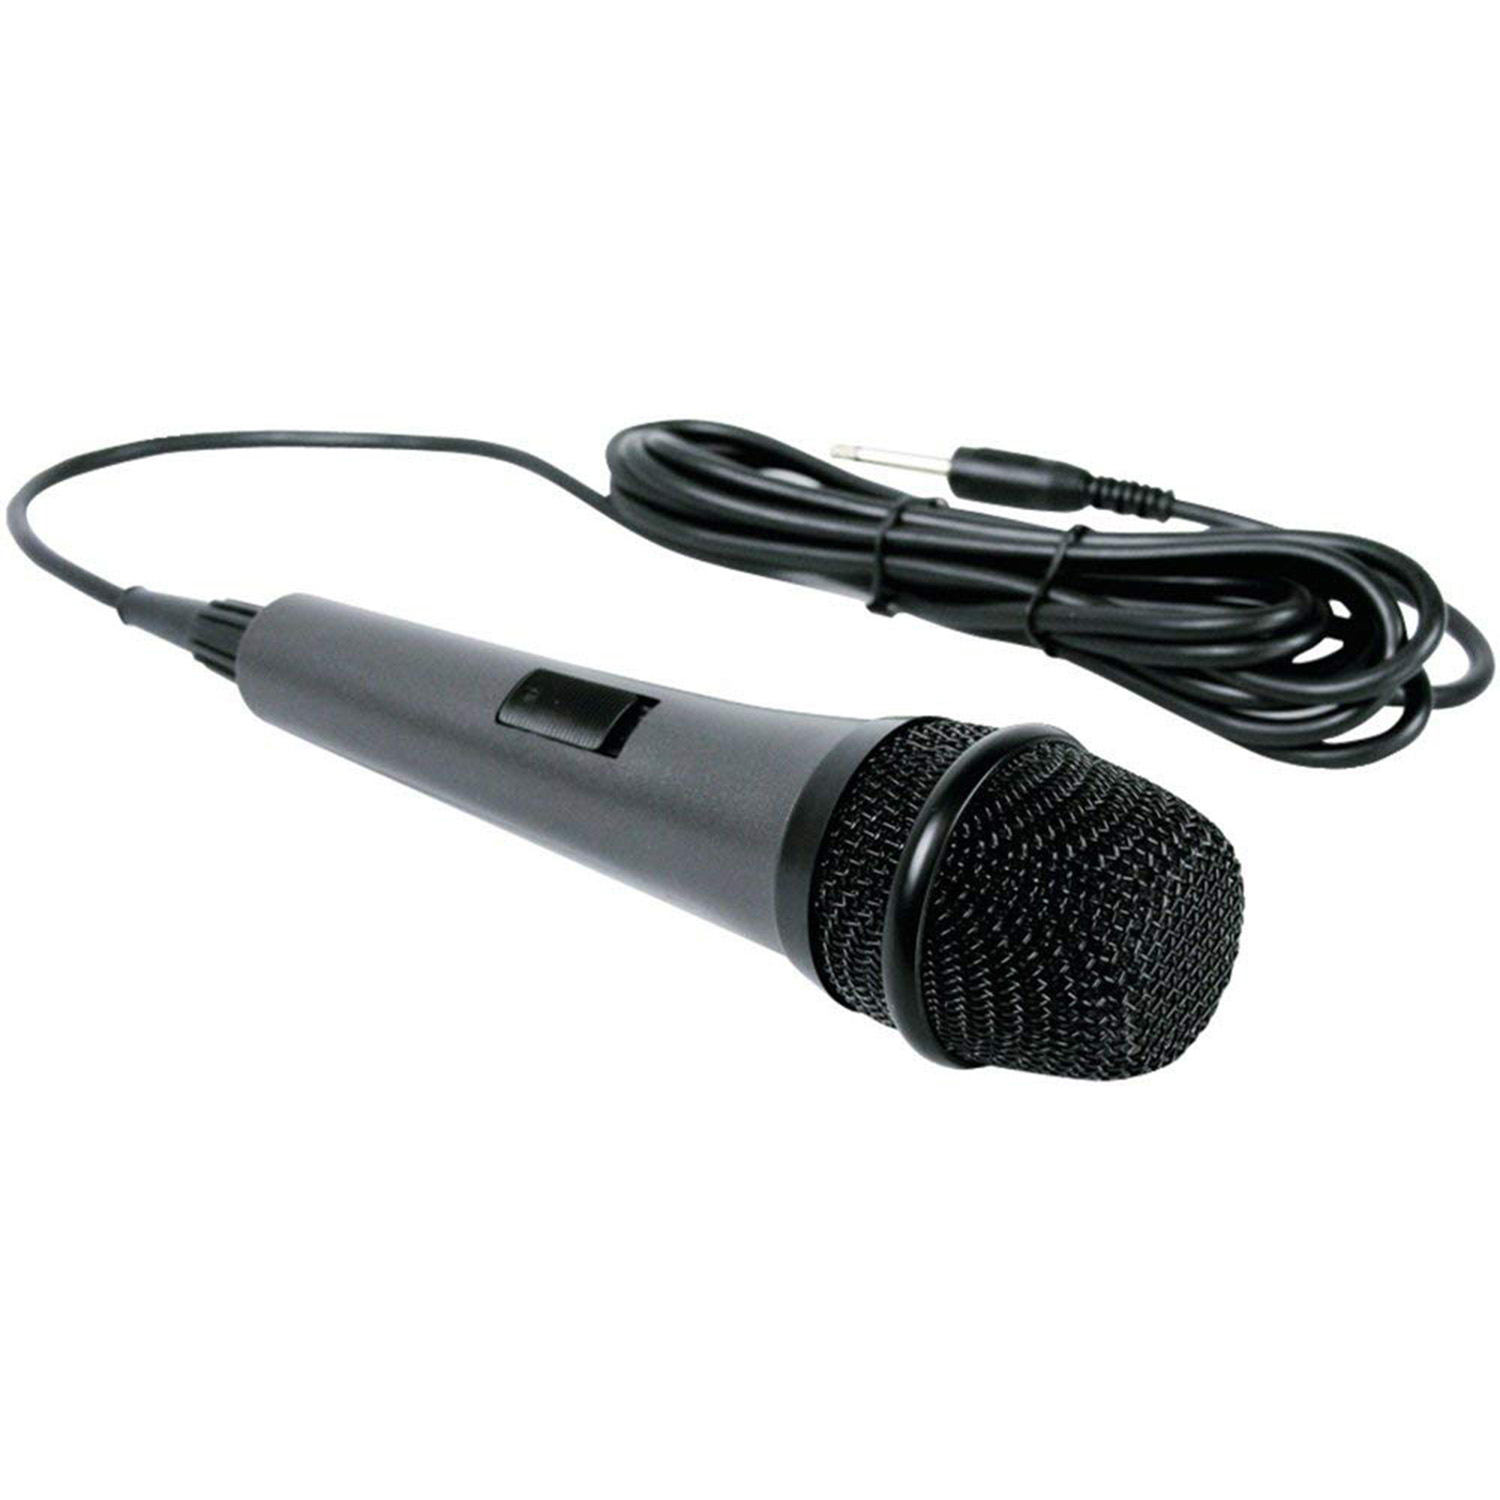 Singing Machine SMM-205 Handheld Wired Portable 10ft Cord Karaoke Microphone